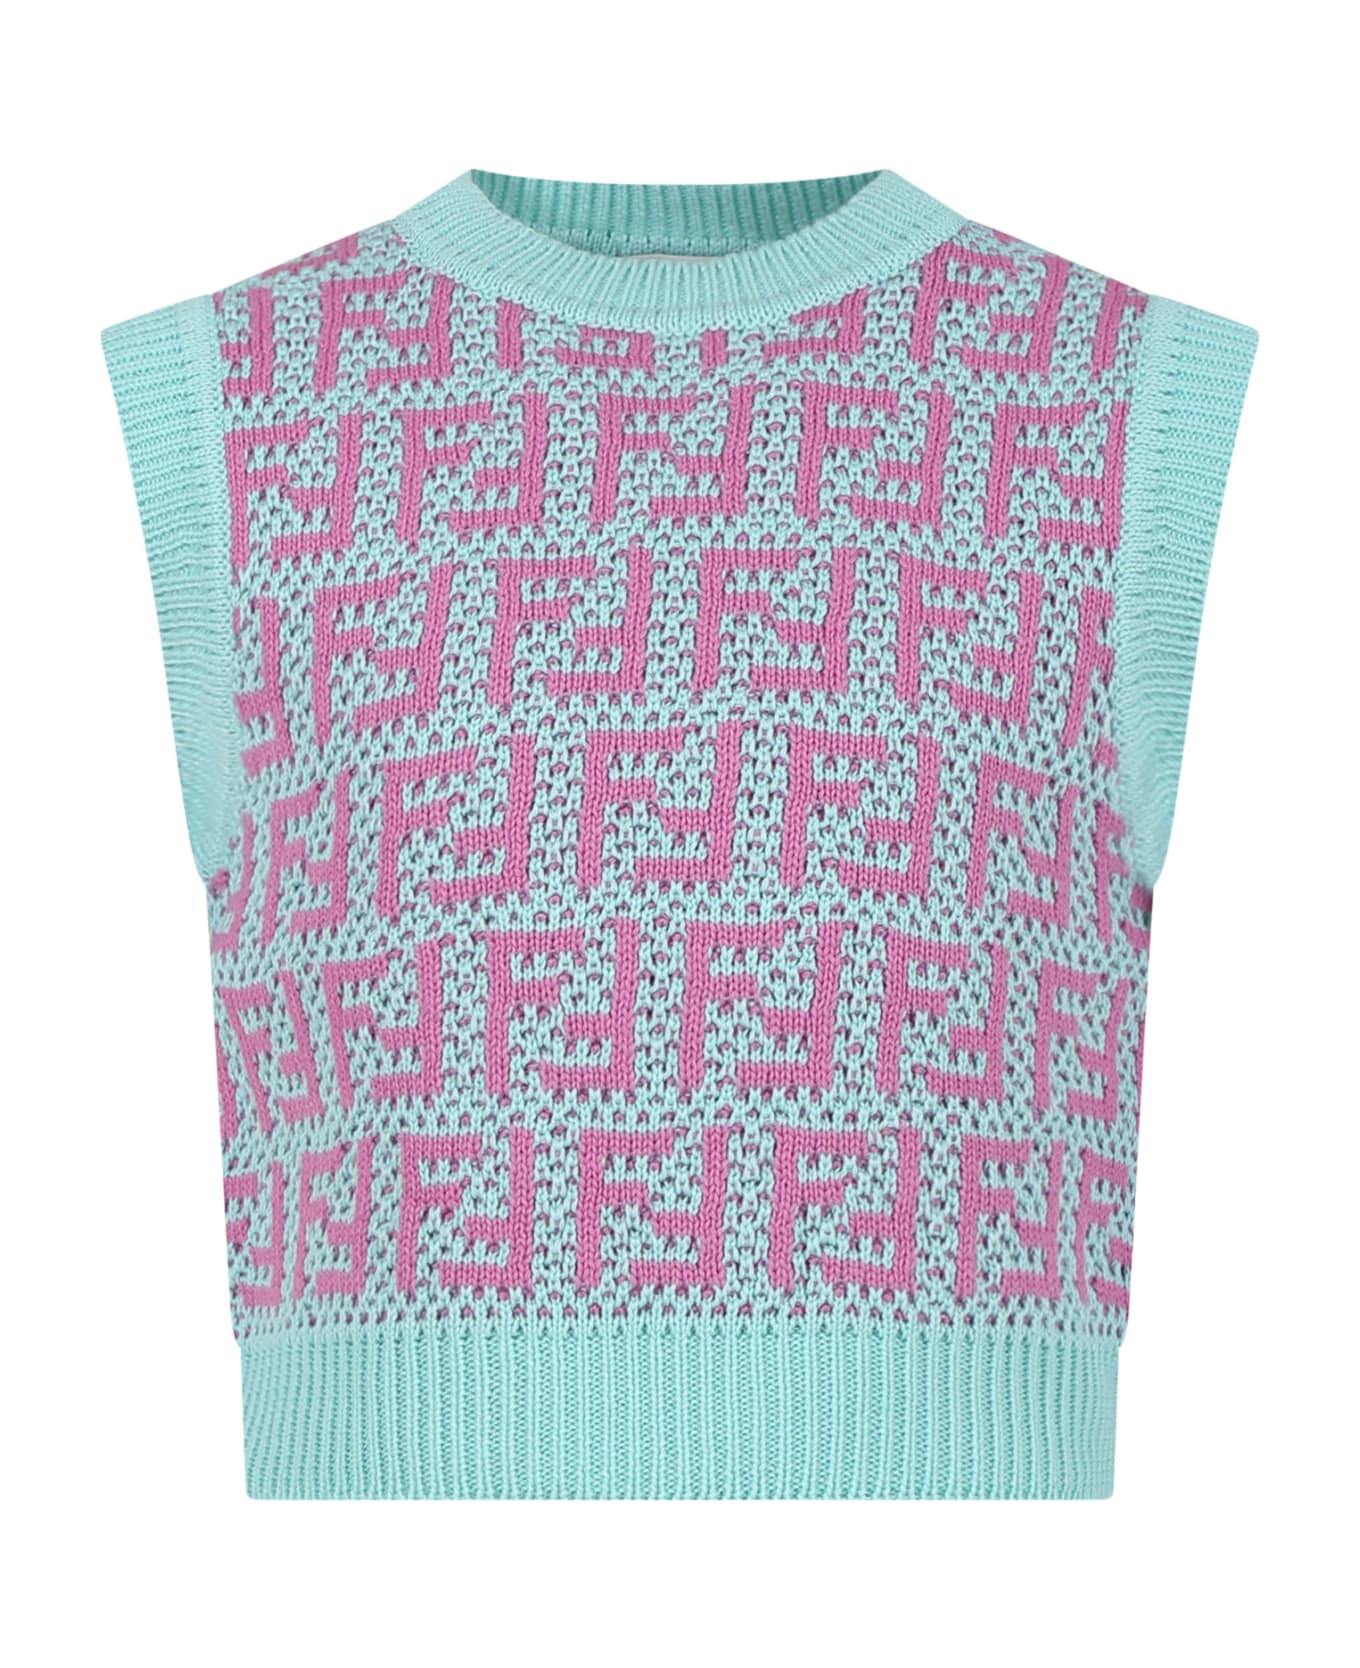 Fendi Light Blue Vest Sweater For Girl With Ff - Multicolor